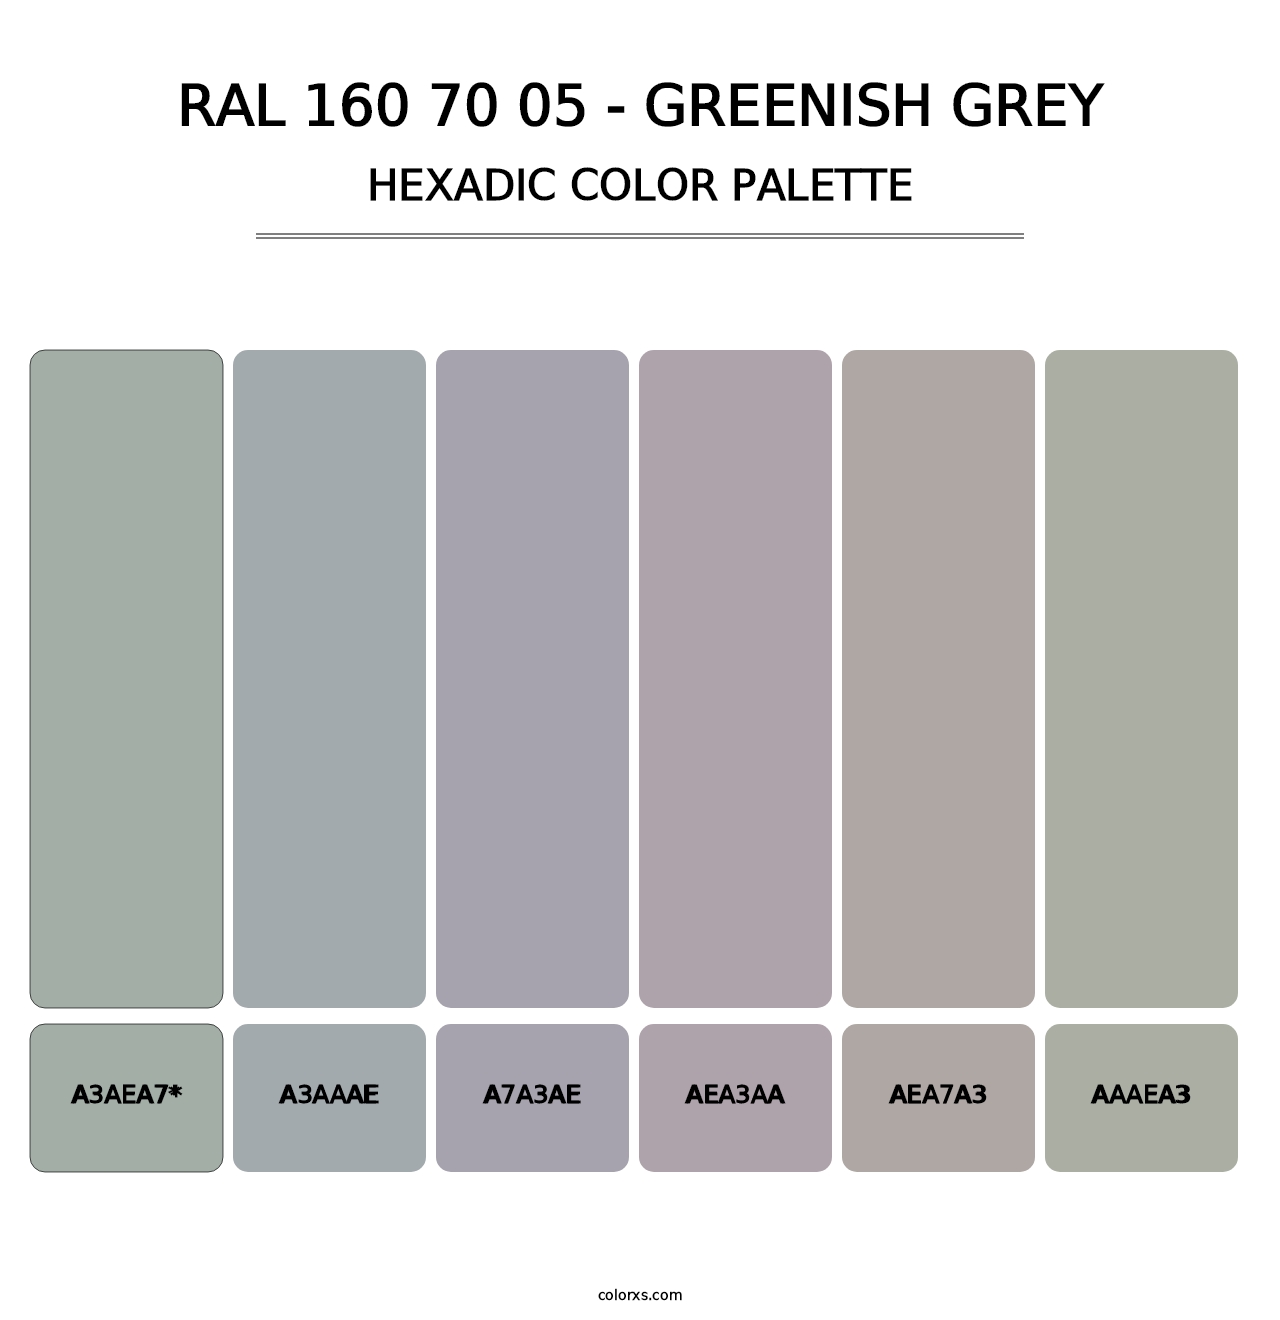 RAL 160 70 05 - Greenish Grey - Hexadic Color Palette